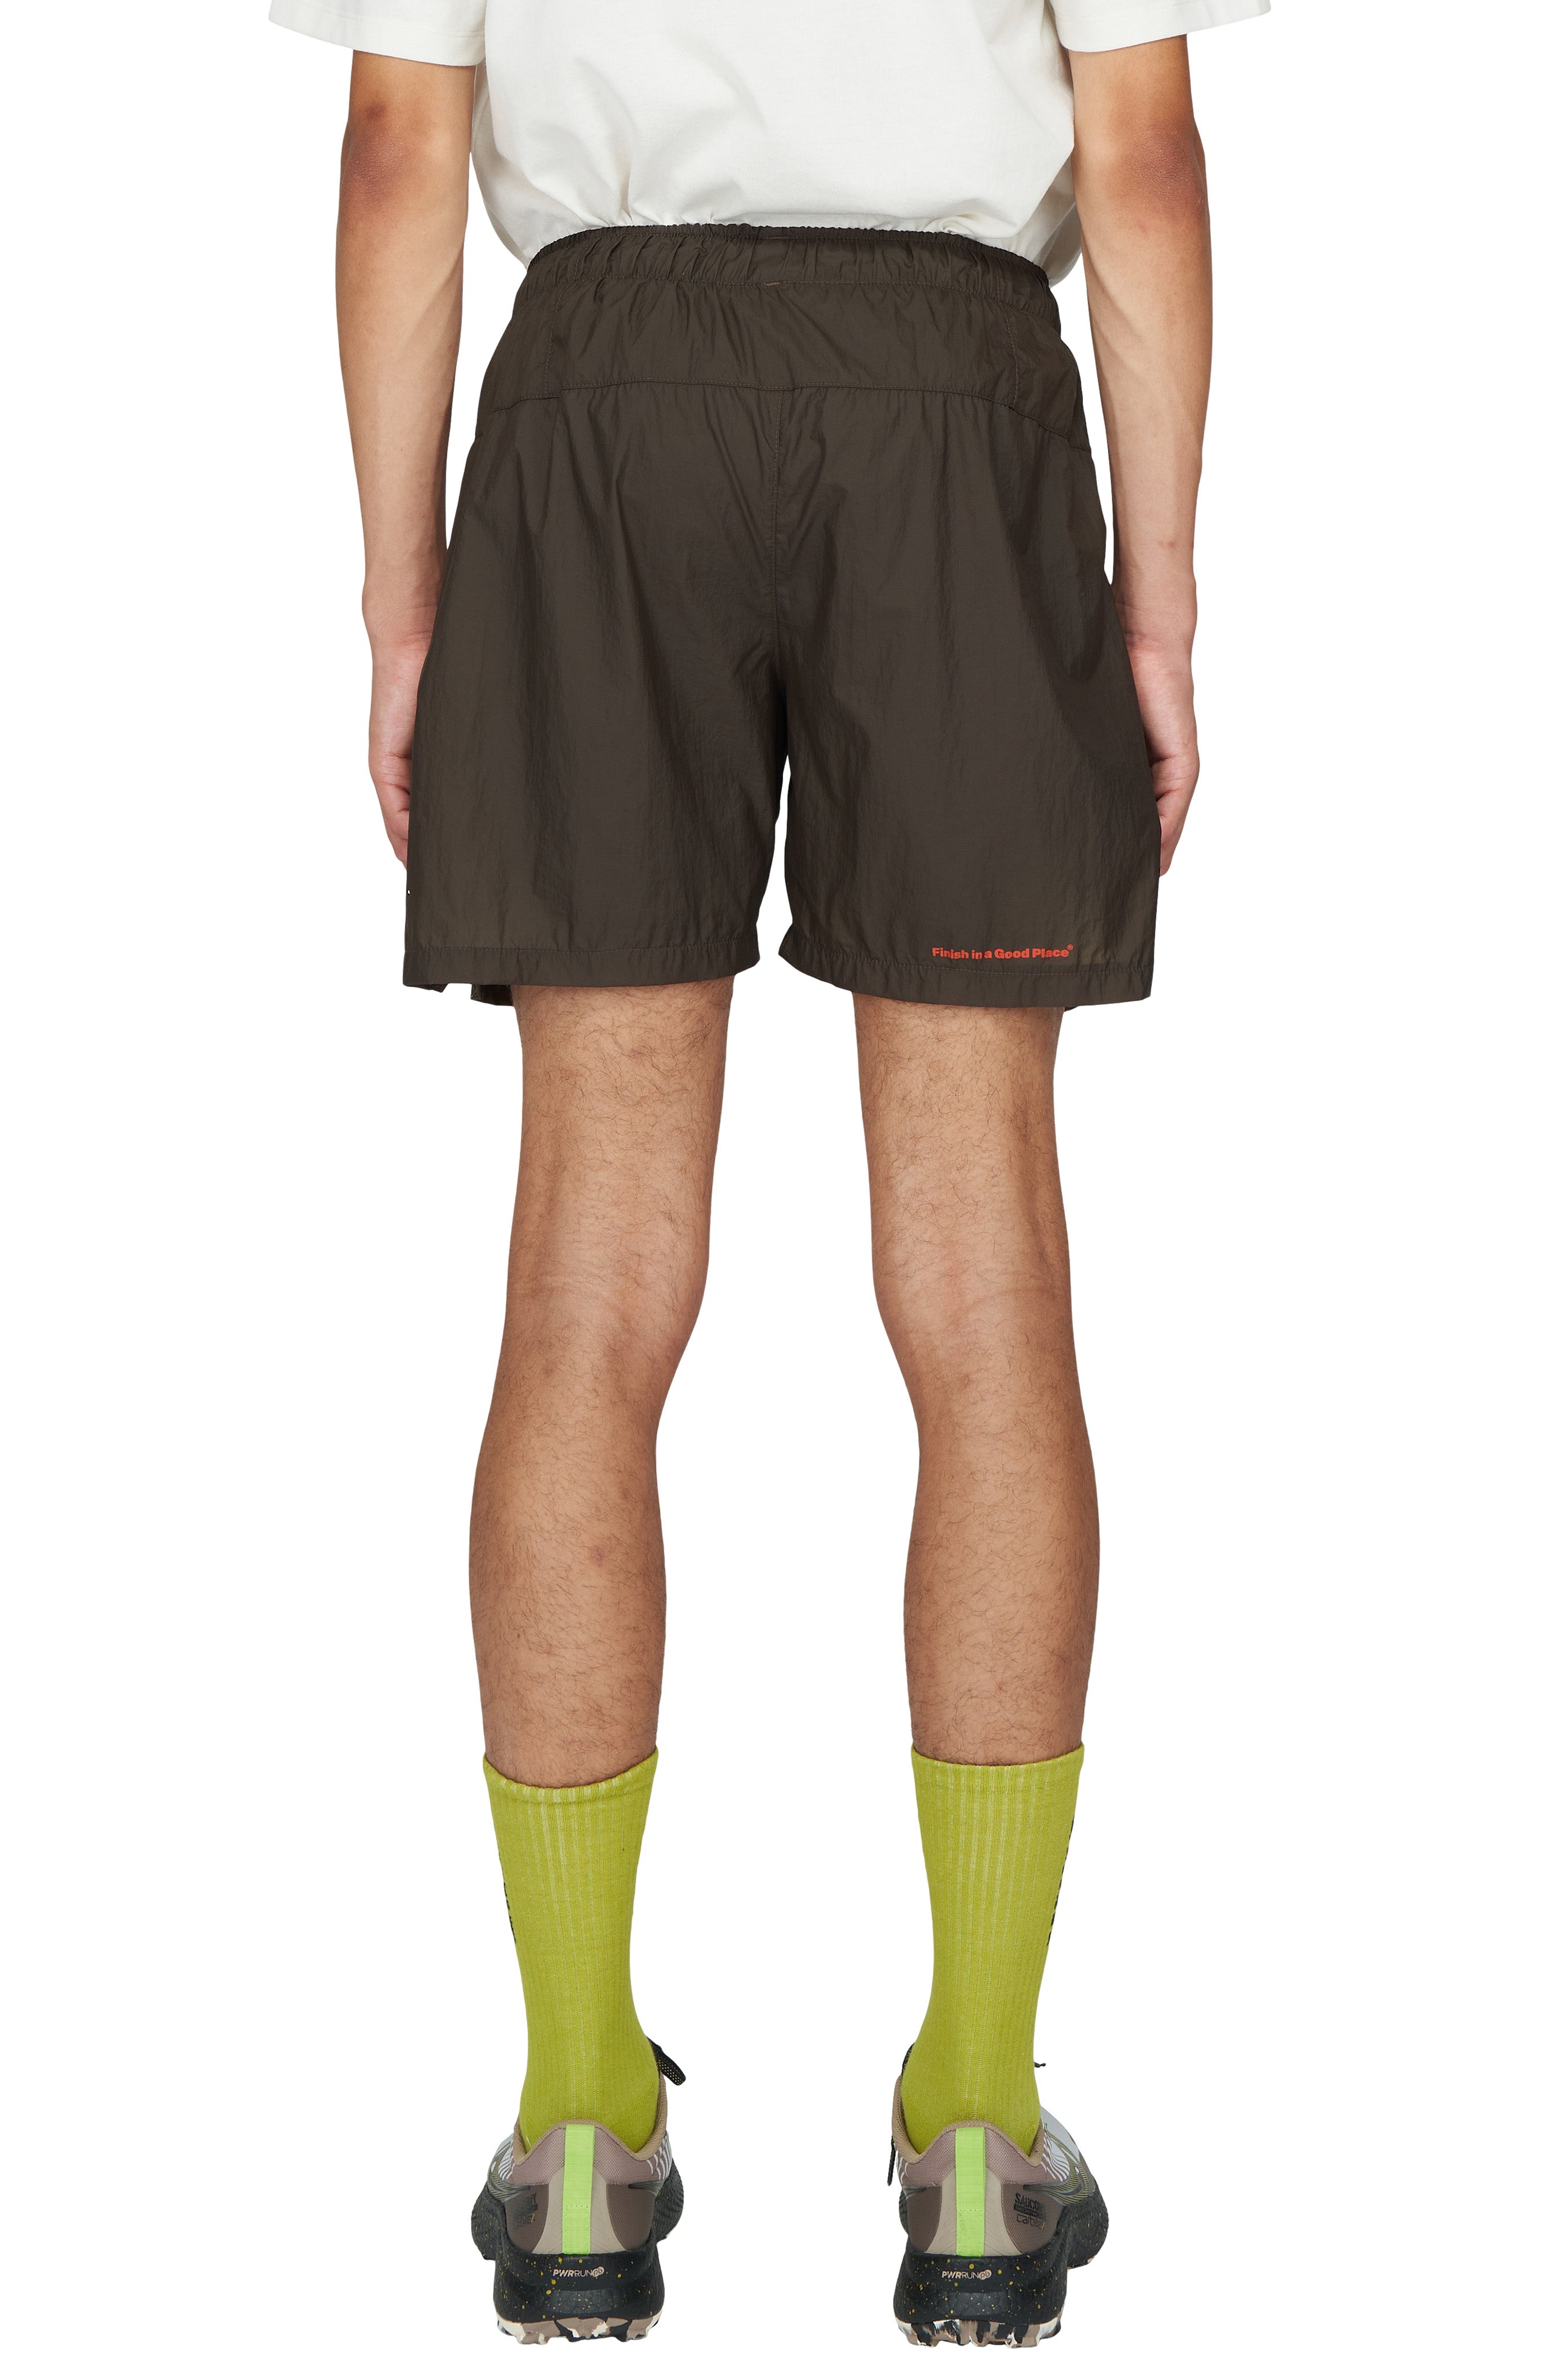 Men's wren green lightweight running shorts. With inner shorts for support. UNNA Smiles Run Shorts